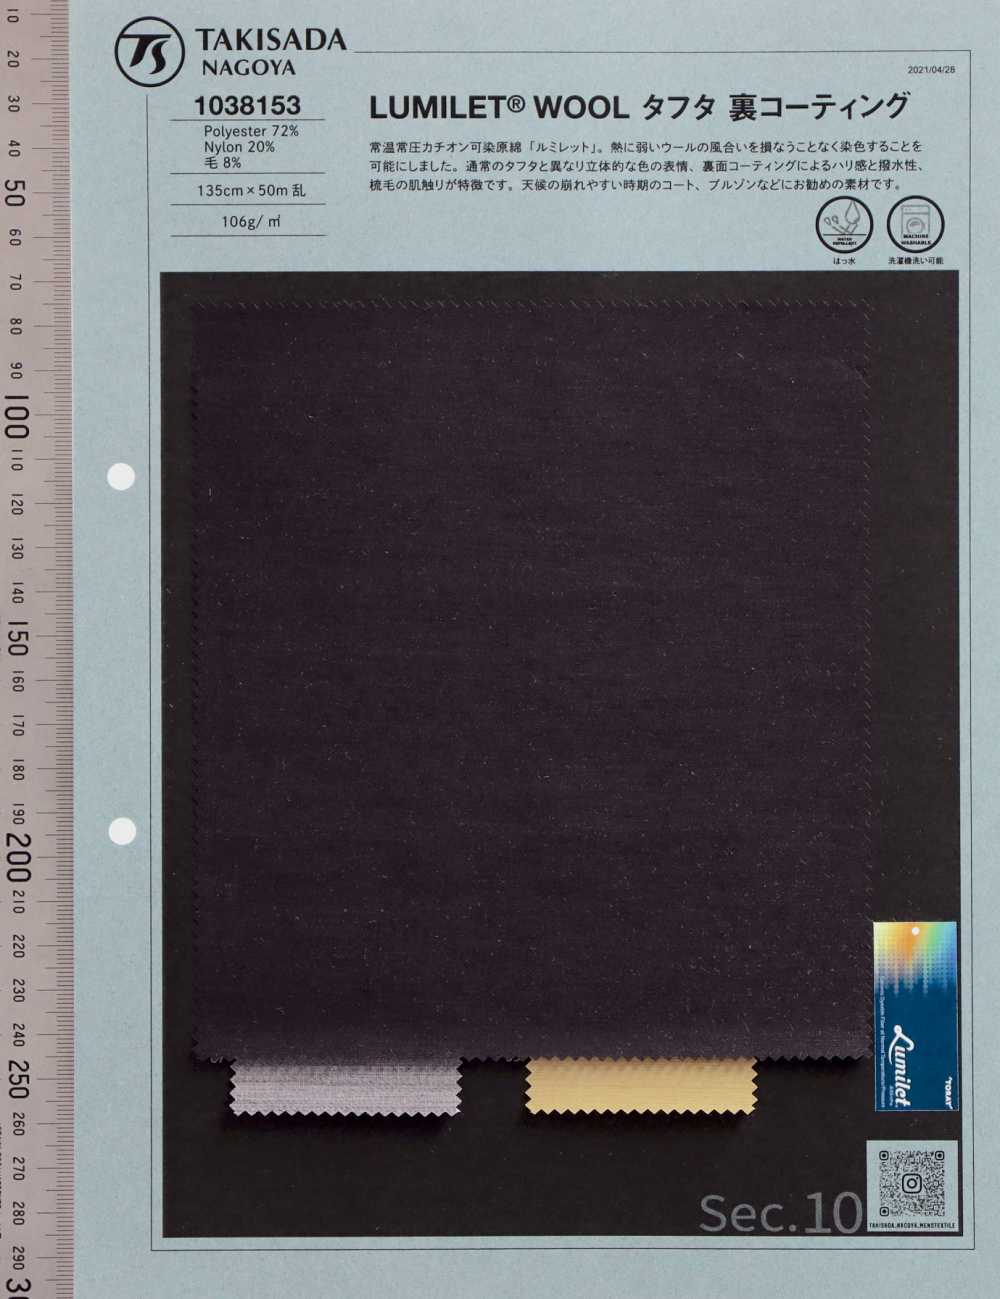 1038153 LUMILET WOOL Taffeta Back Coating[Textile / Fabric] Takisada Nagoya